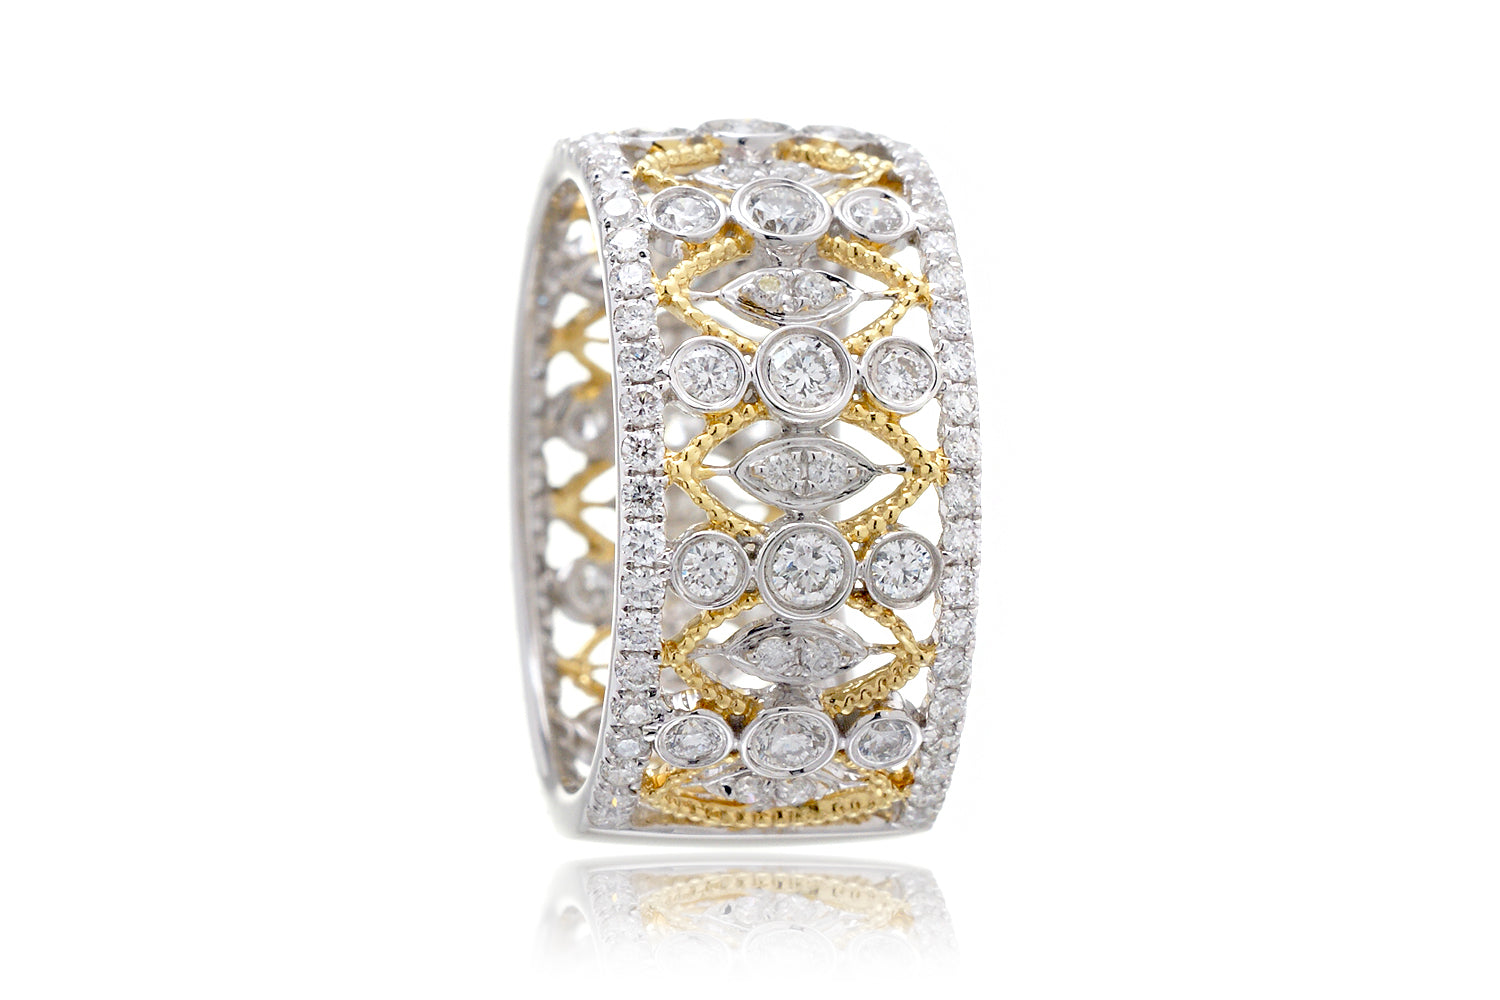 The Esmeralda Diamond Ring